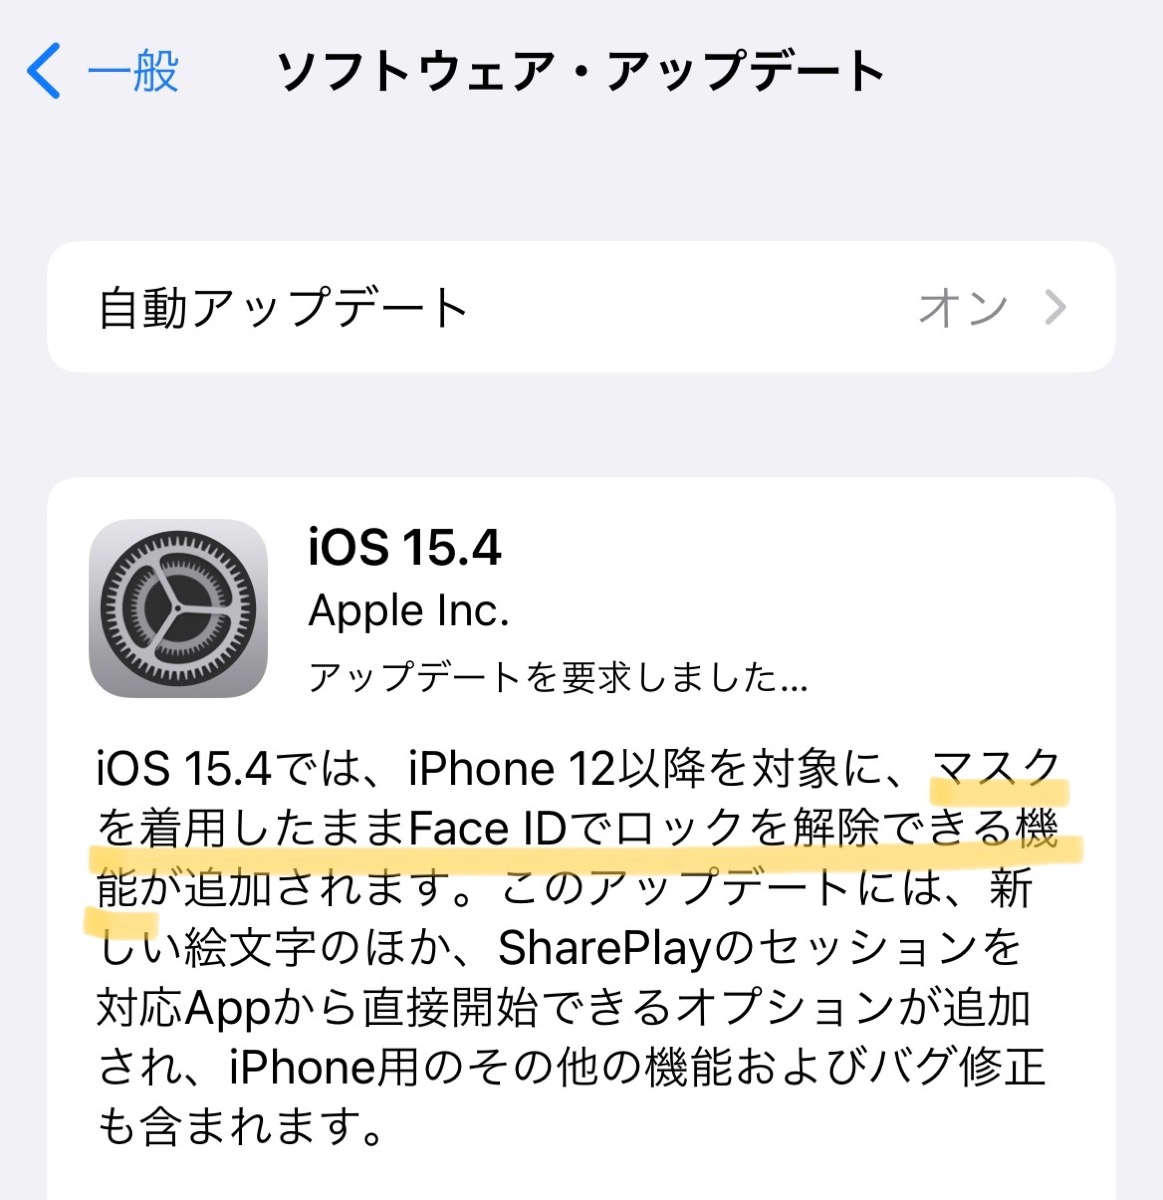 iPhone マスク Face ID